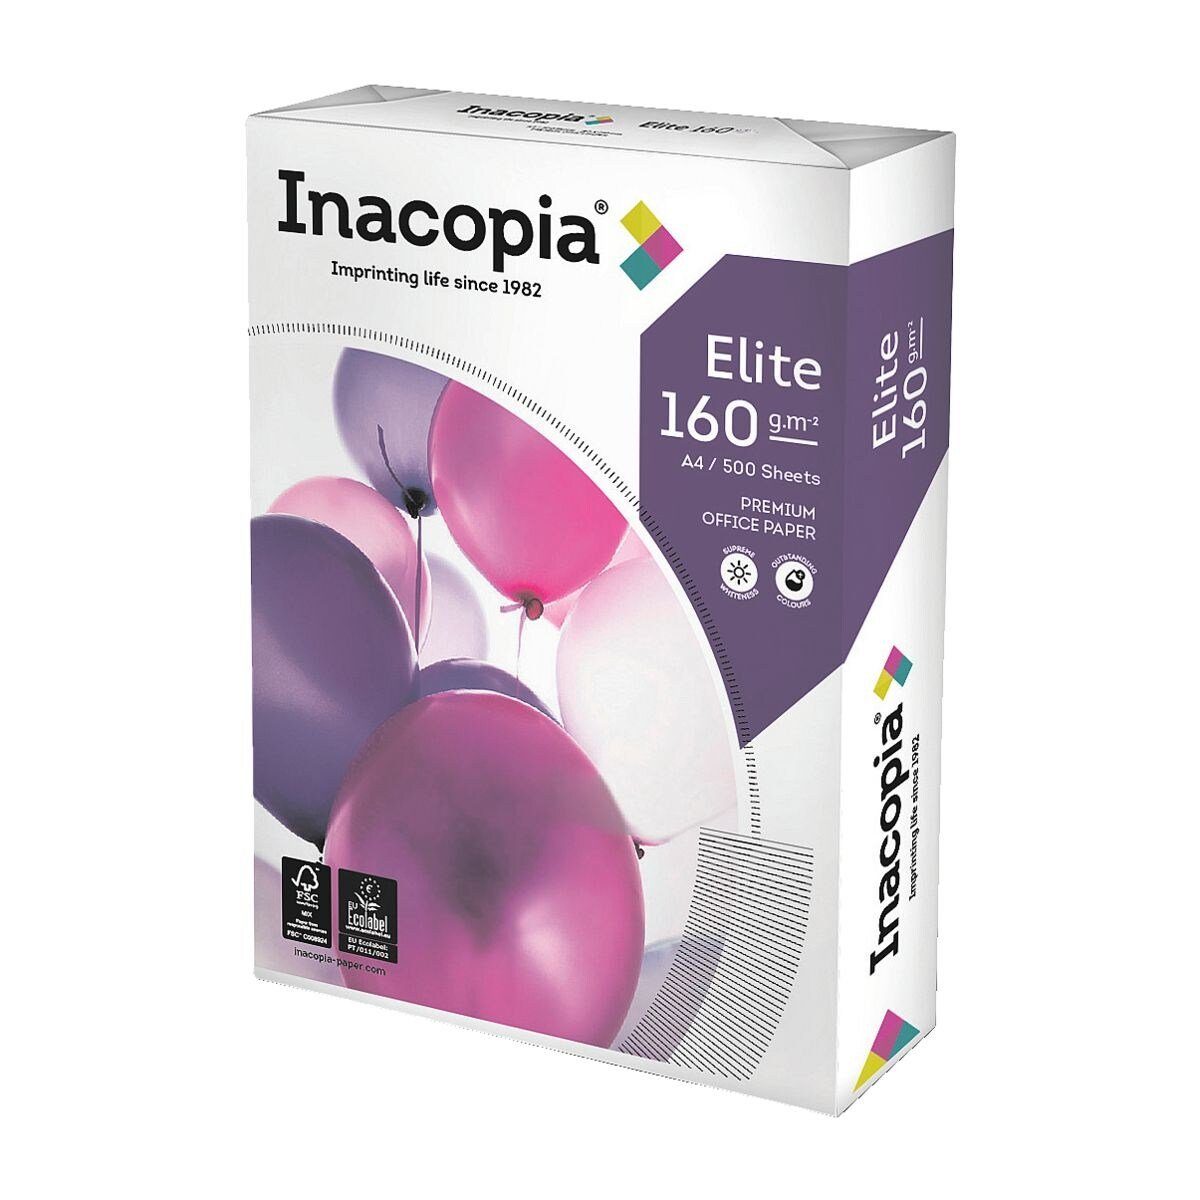 INACOPIA Druckerpapier Elite, A4, g/m², DIN Format CIE, 160 Blatt 171 250